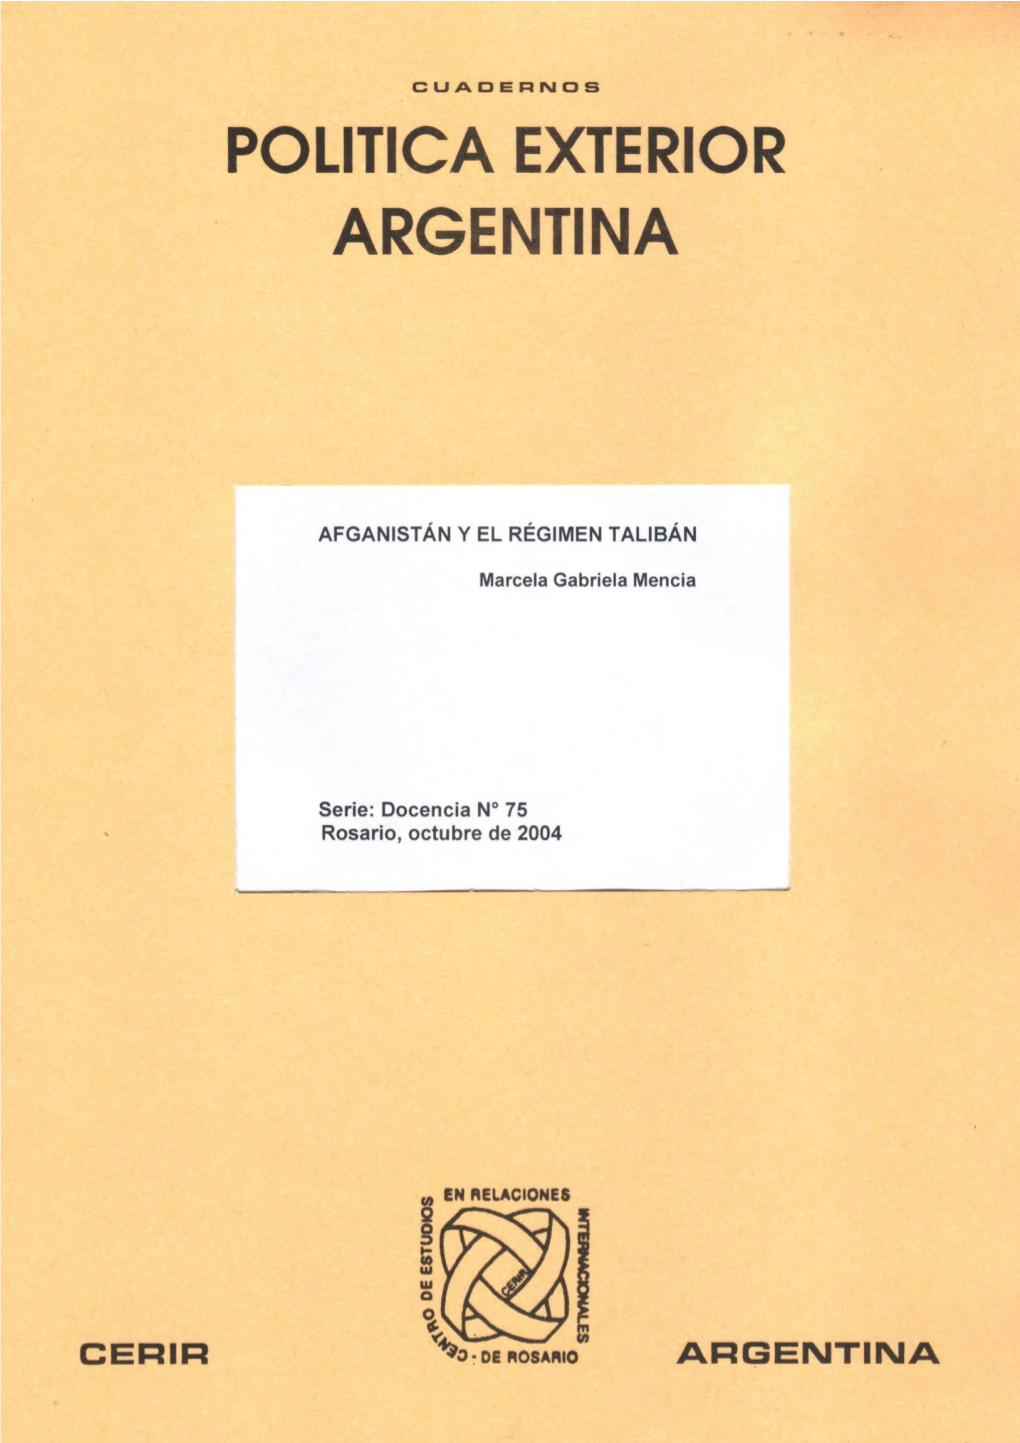 Cuadernos De Politica Exterior Argentina”